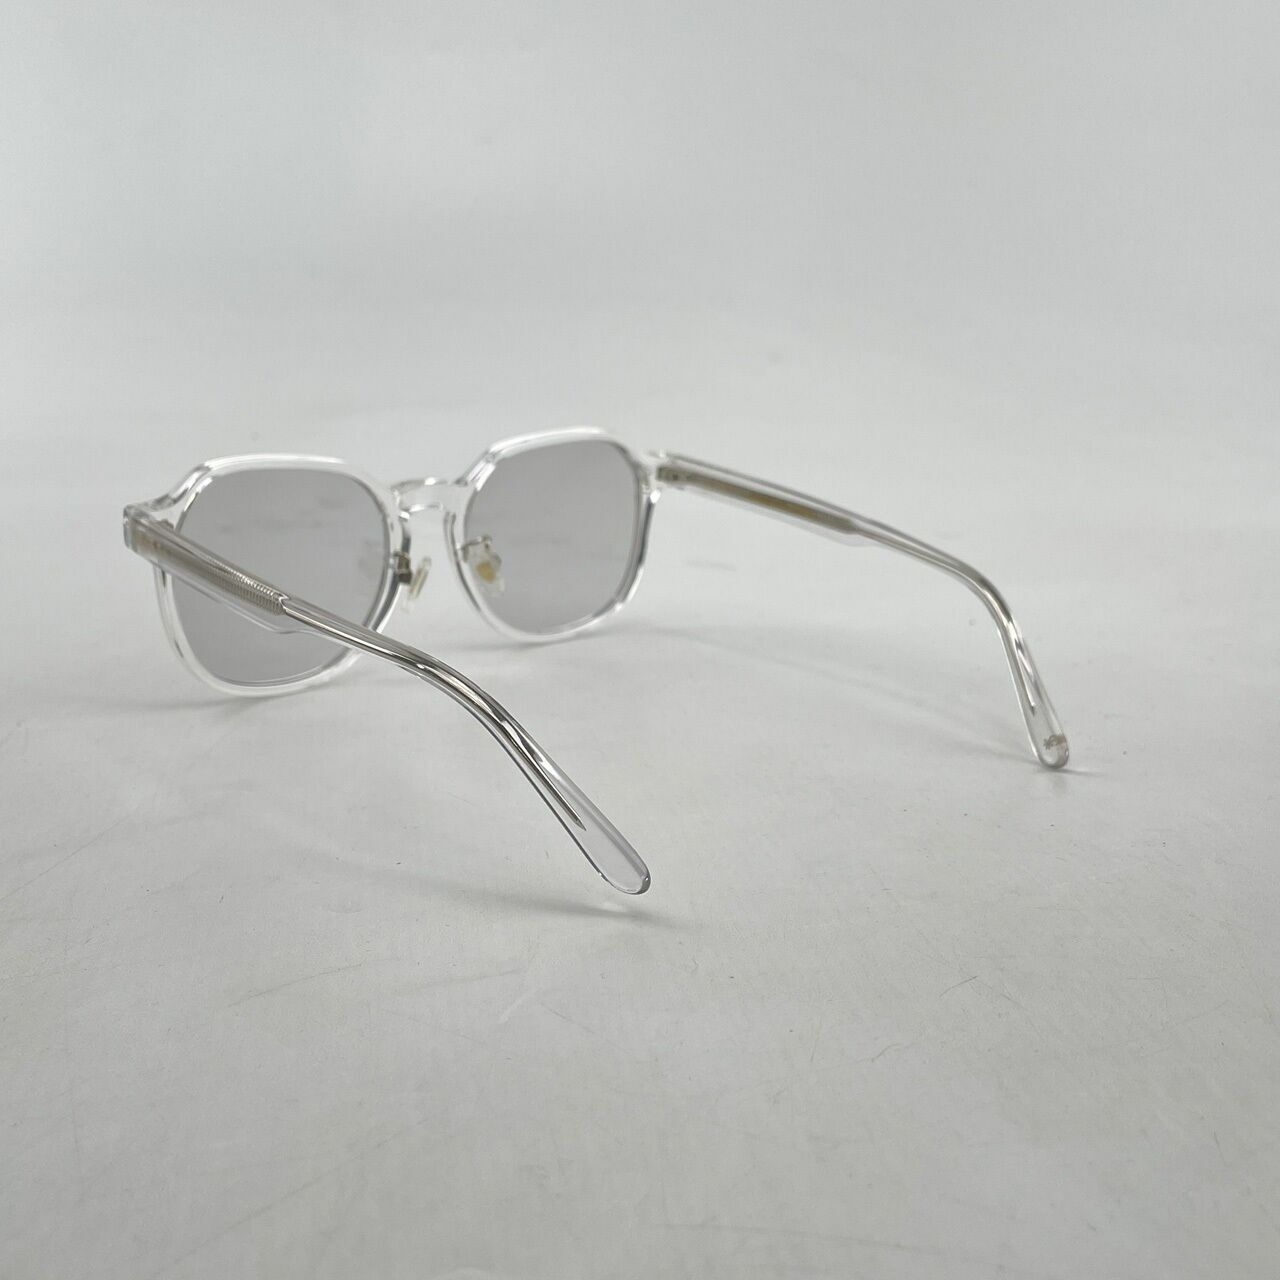 RIETI Clear Sunglasses